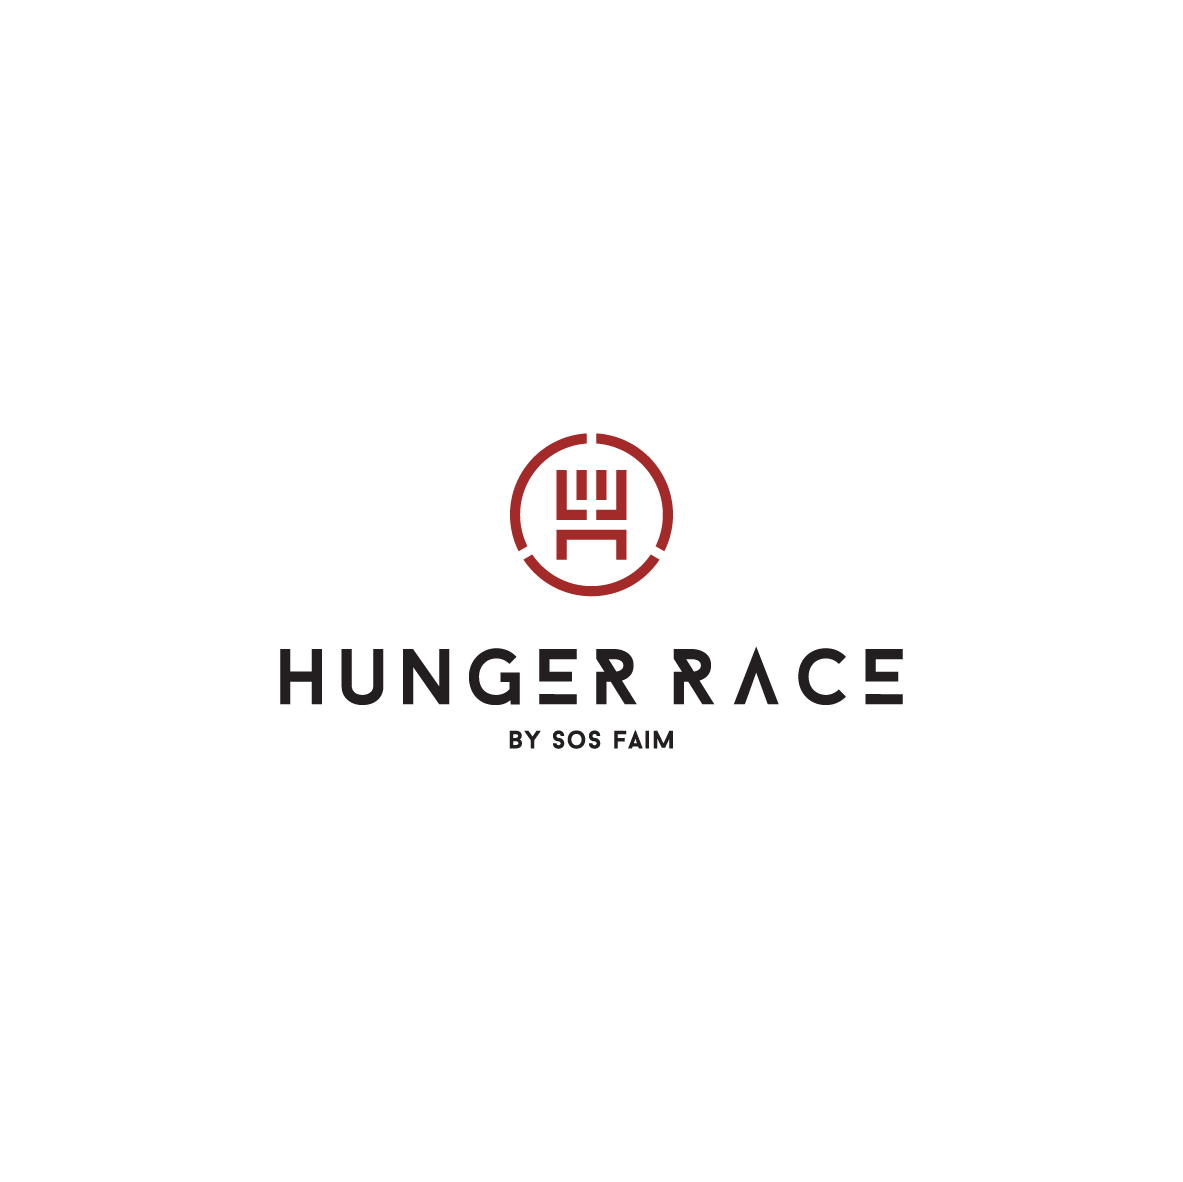 Hunger Race logo by SOS Faim